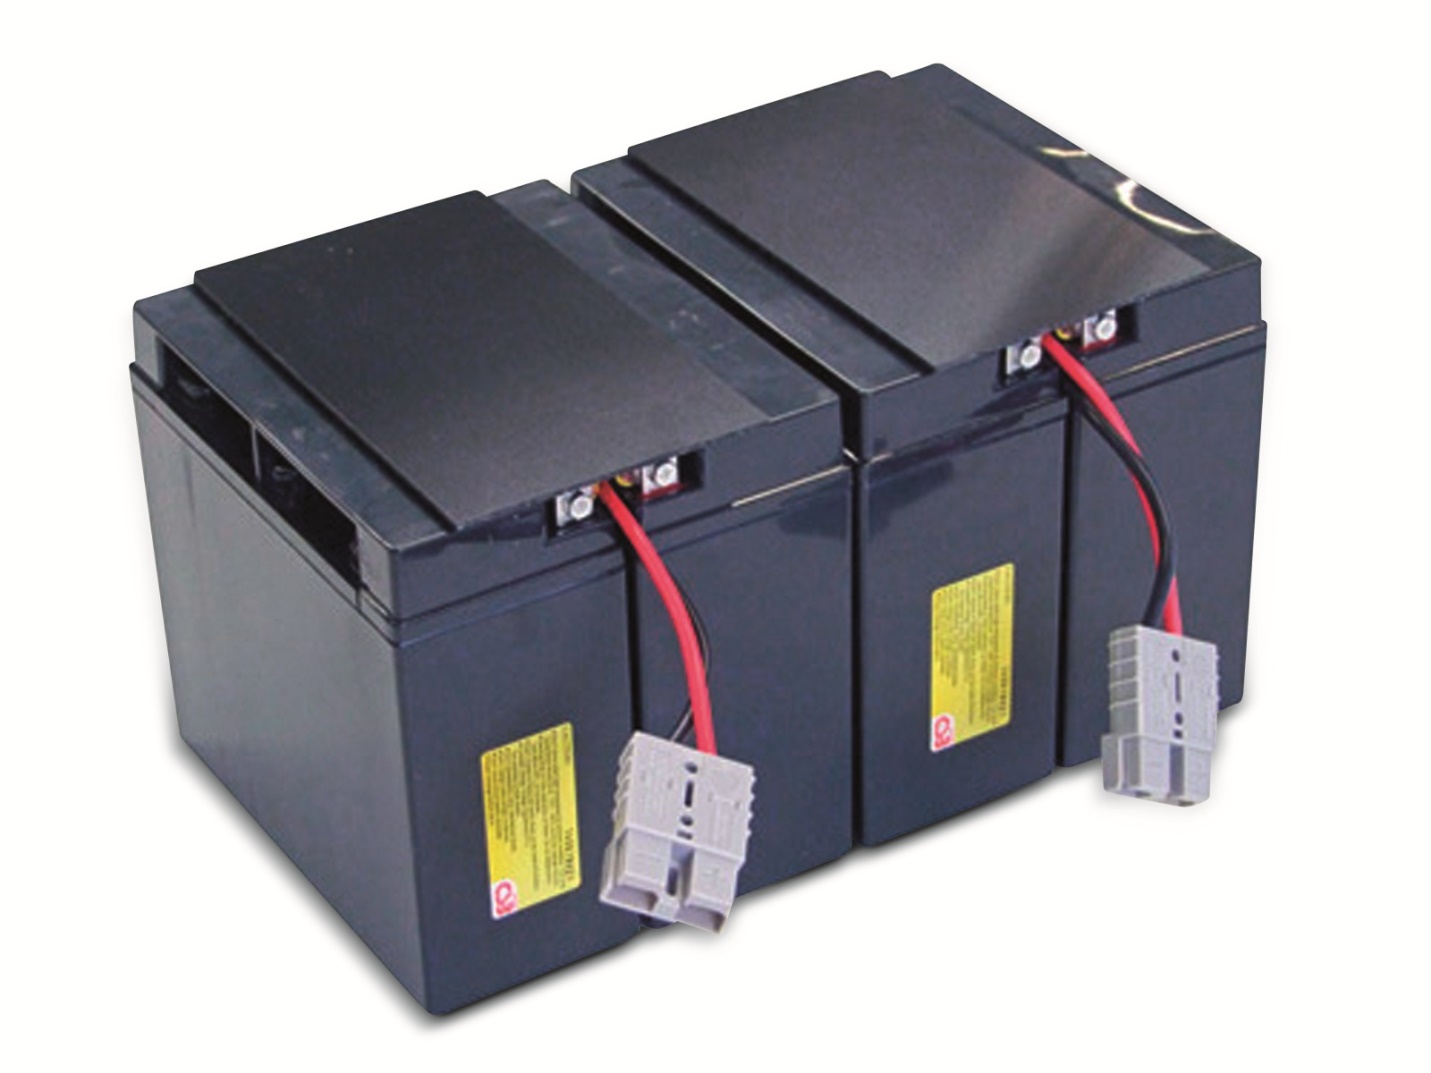 Apc ups battery. Smart ups 2200 Battery Replacement. APC rbc11. Rbc11 батарея APC. APC Smart ups 2200.